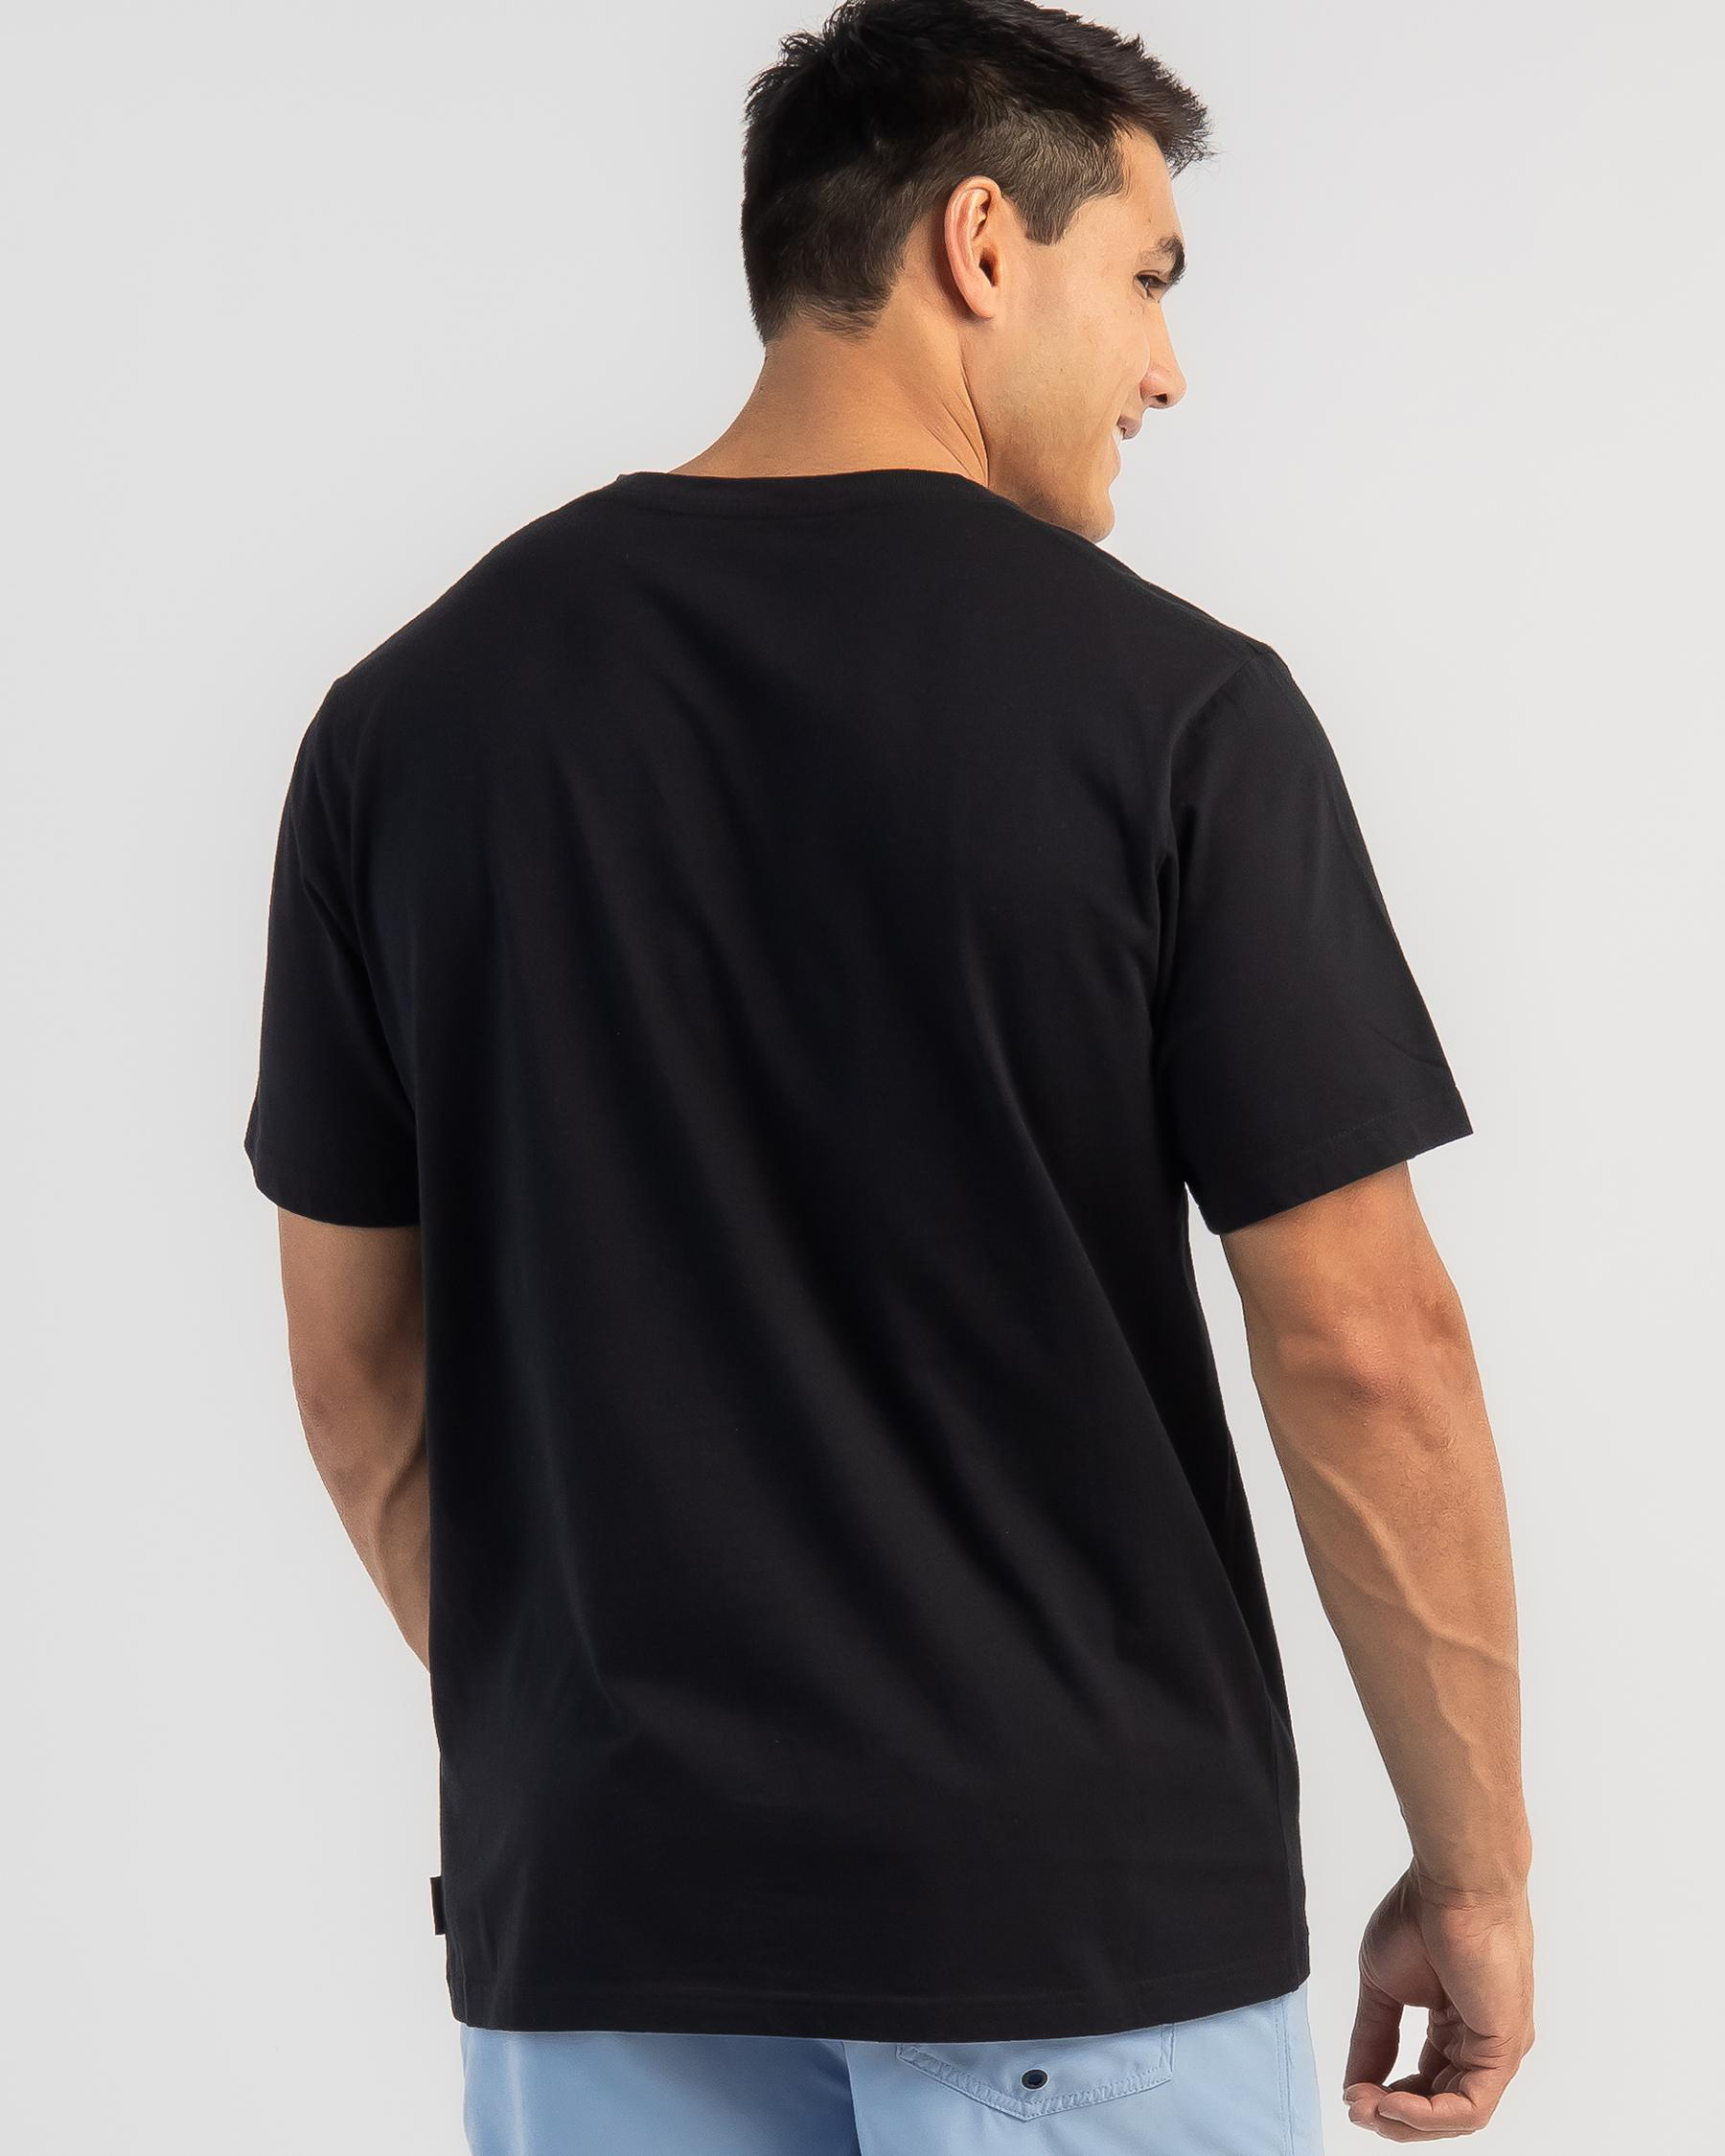 Shop Rusty Short Cut 2 T-Shirt In Black - Fast Shipping & Easy Returns ...